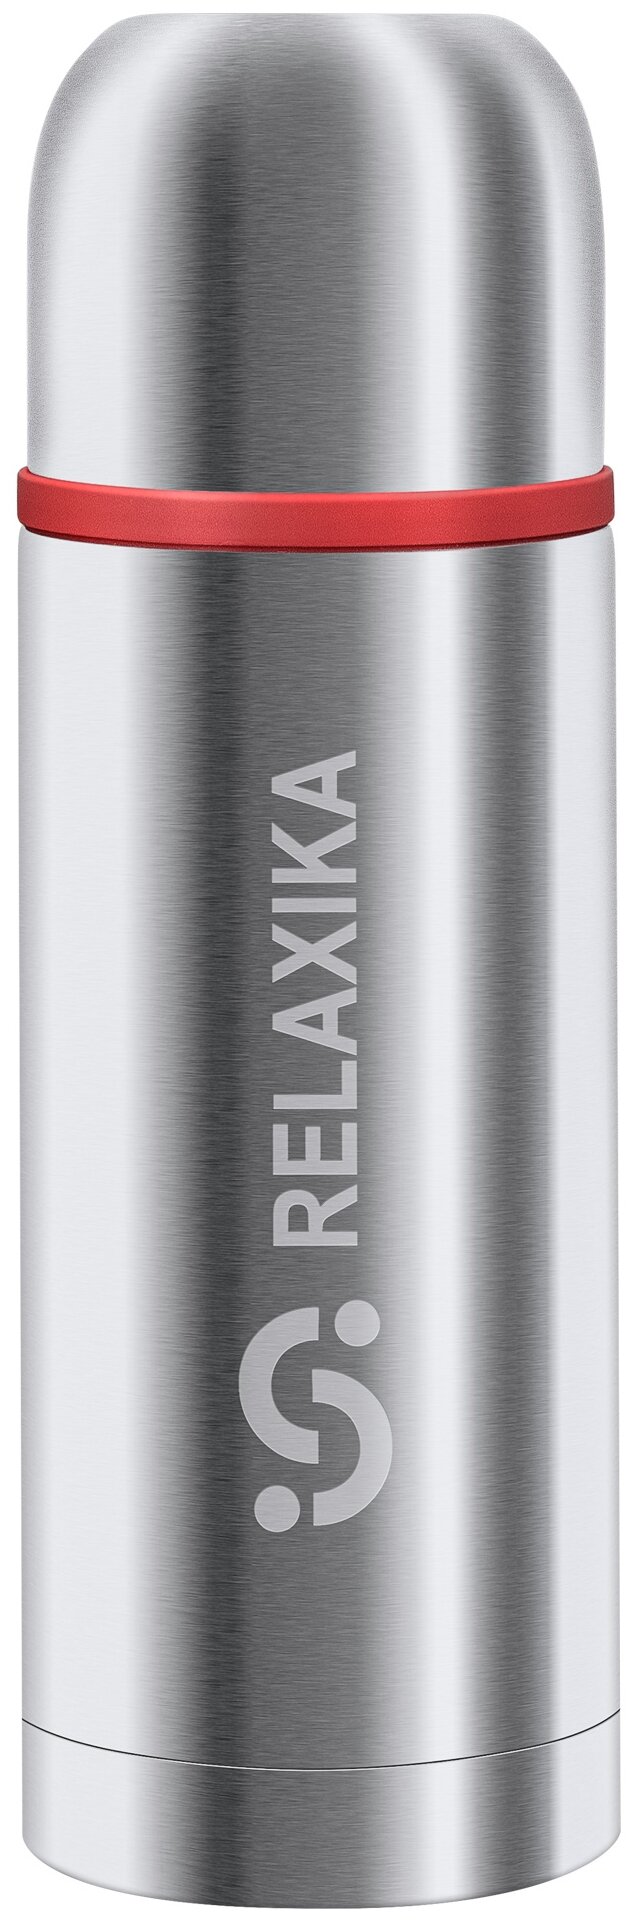 Термос Relaxika R101.350.1